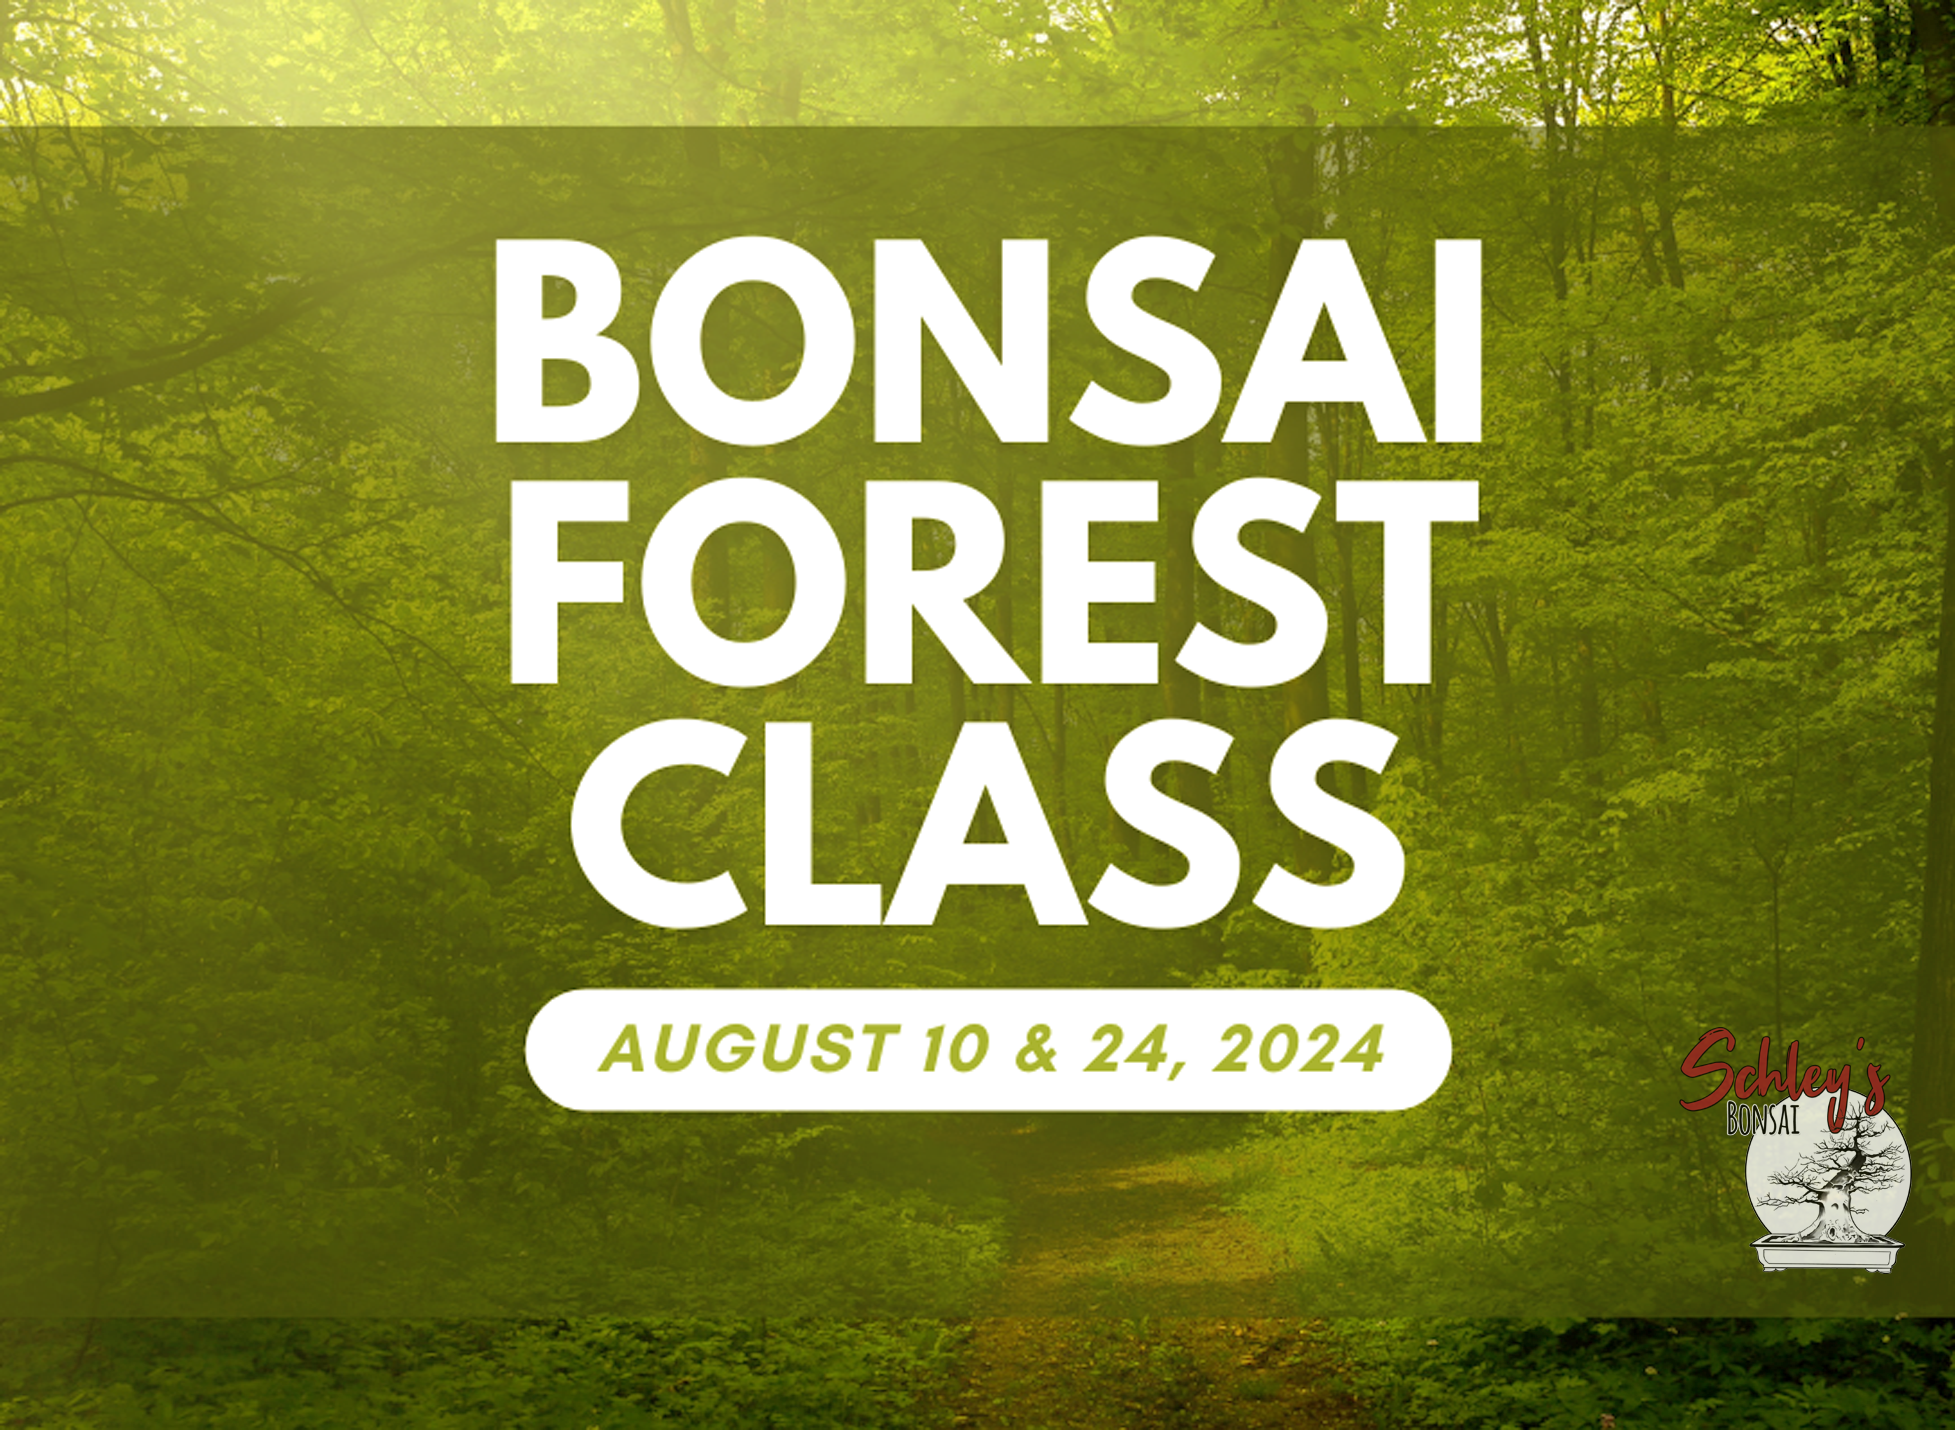 Bonsai Forest Class - Saturday, August 10th or 24th @ 9AM